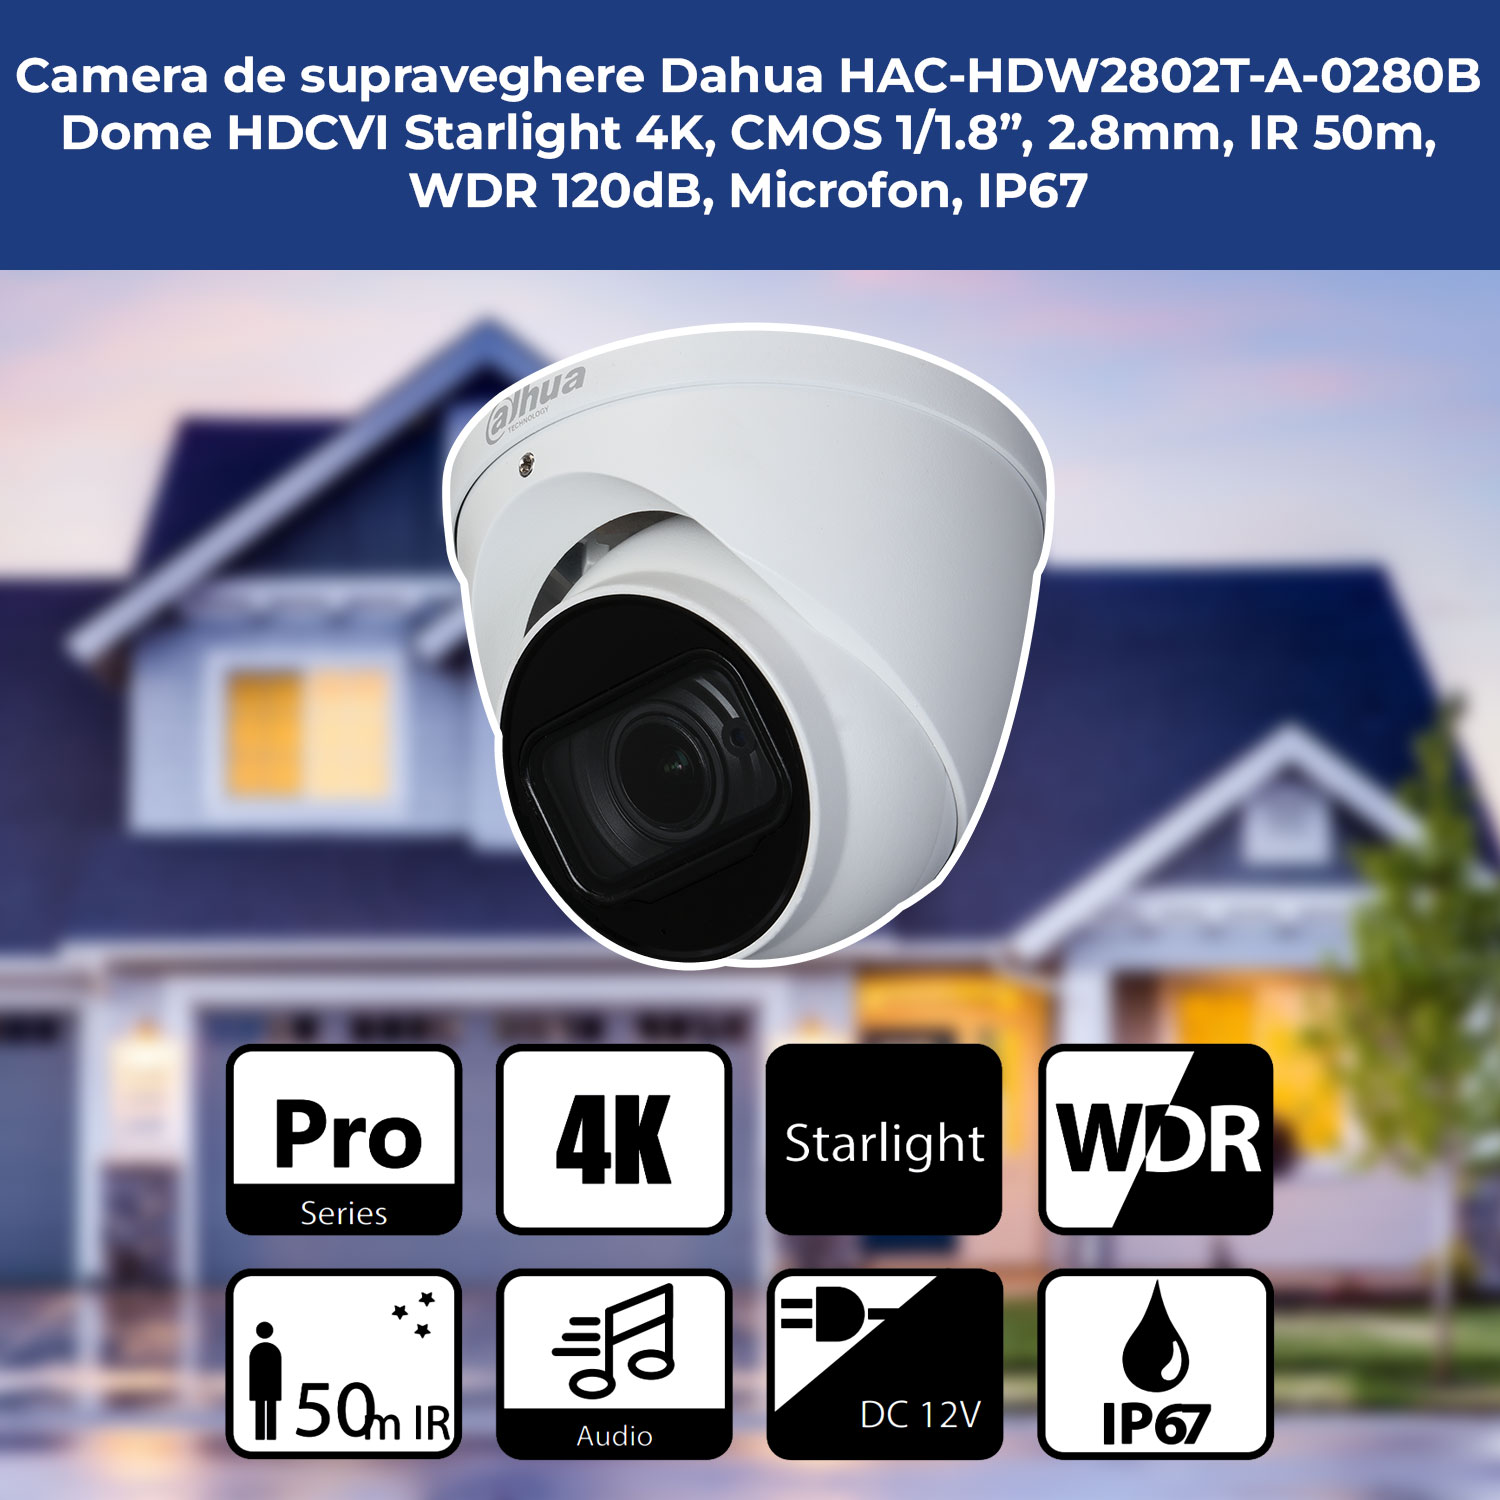 Camera de supraveghere Dahua Dome HDCVI si analogica HAC-HDW2802T-A-0280B, Eyeball Camera 8MP, CMOS 1/1.8inch, Starlight, 120 dB true WDR, 3D NR, HD/SD comutabil, Lentila fixa 2.8mm, IR 50m, Smart IR, Microfon, IP67.